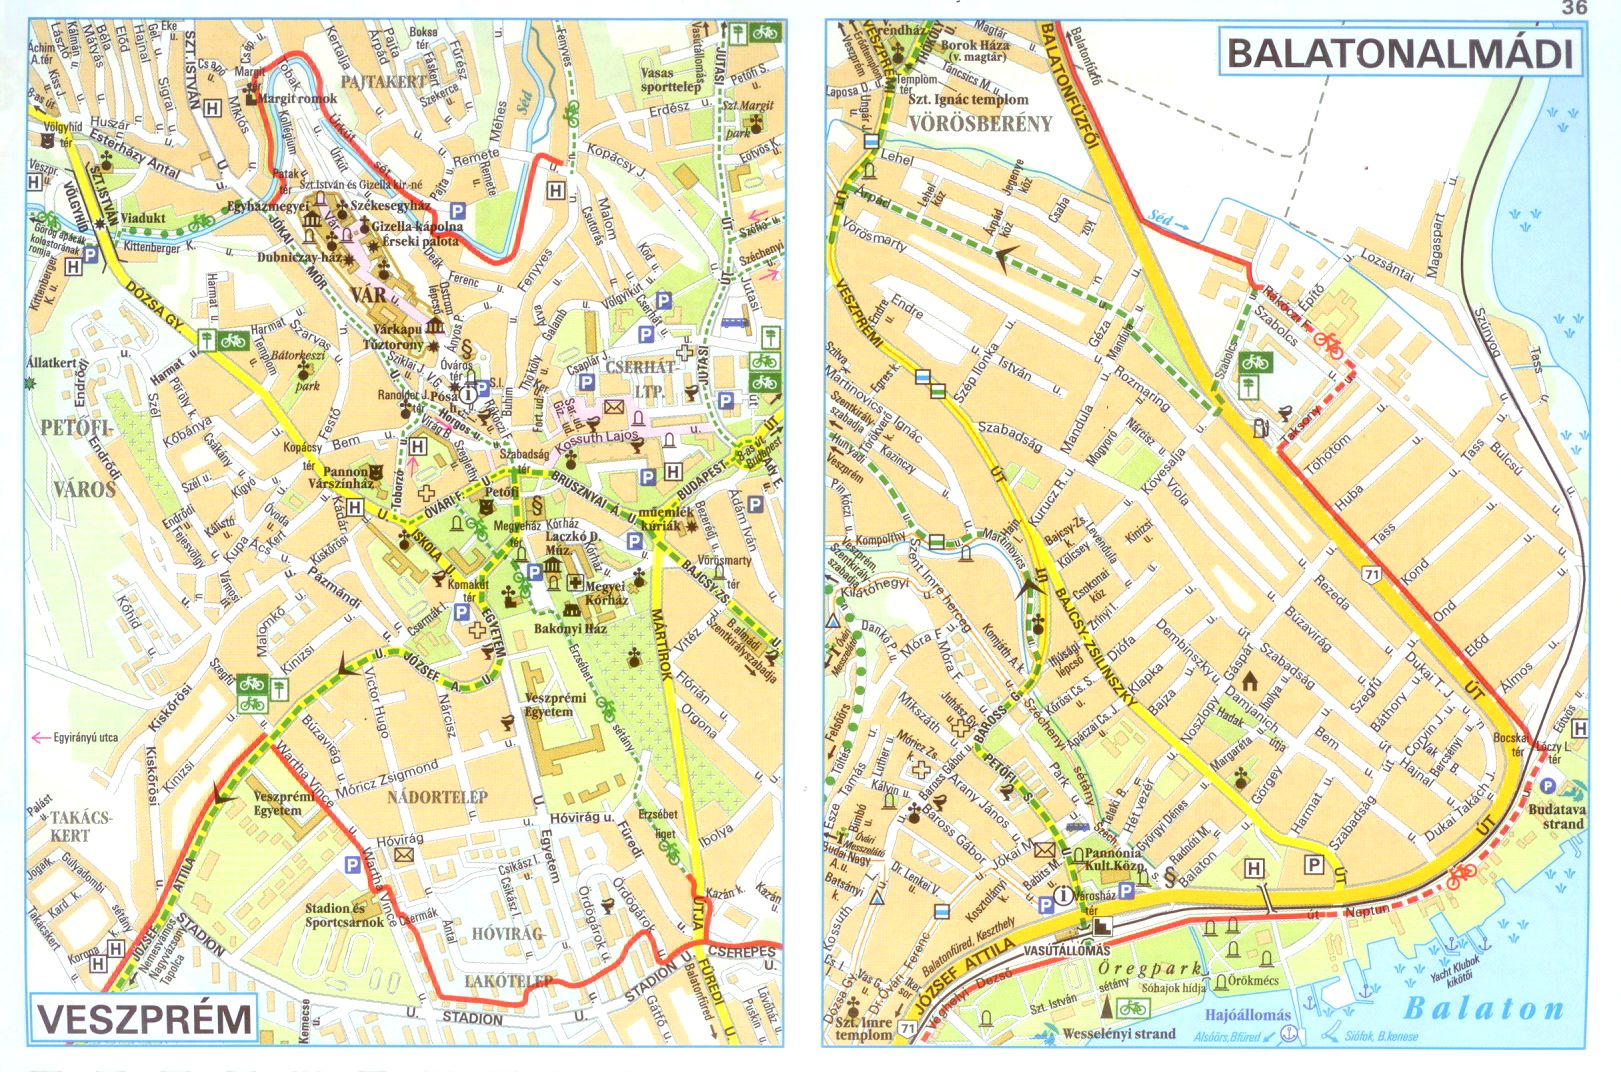 Balaton biking atlas sample city maps